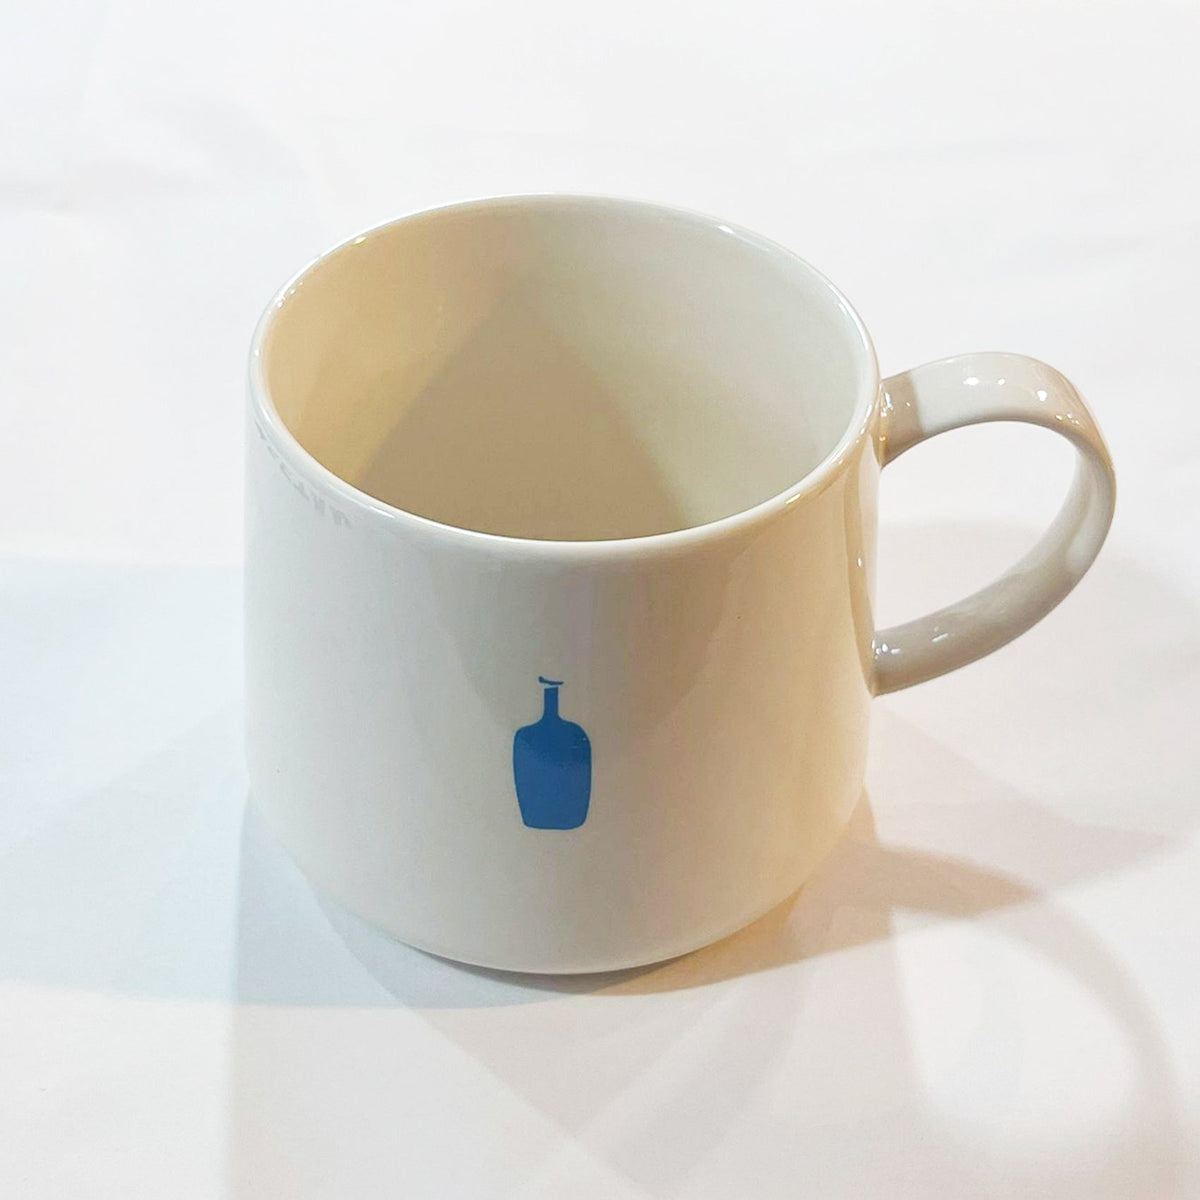 Blue Bottle Coffee KIYOSUMI Mug [ 340ml ] – cotwohk